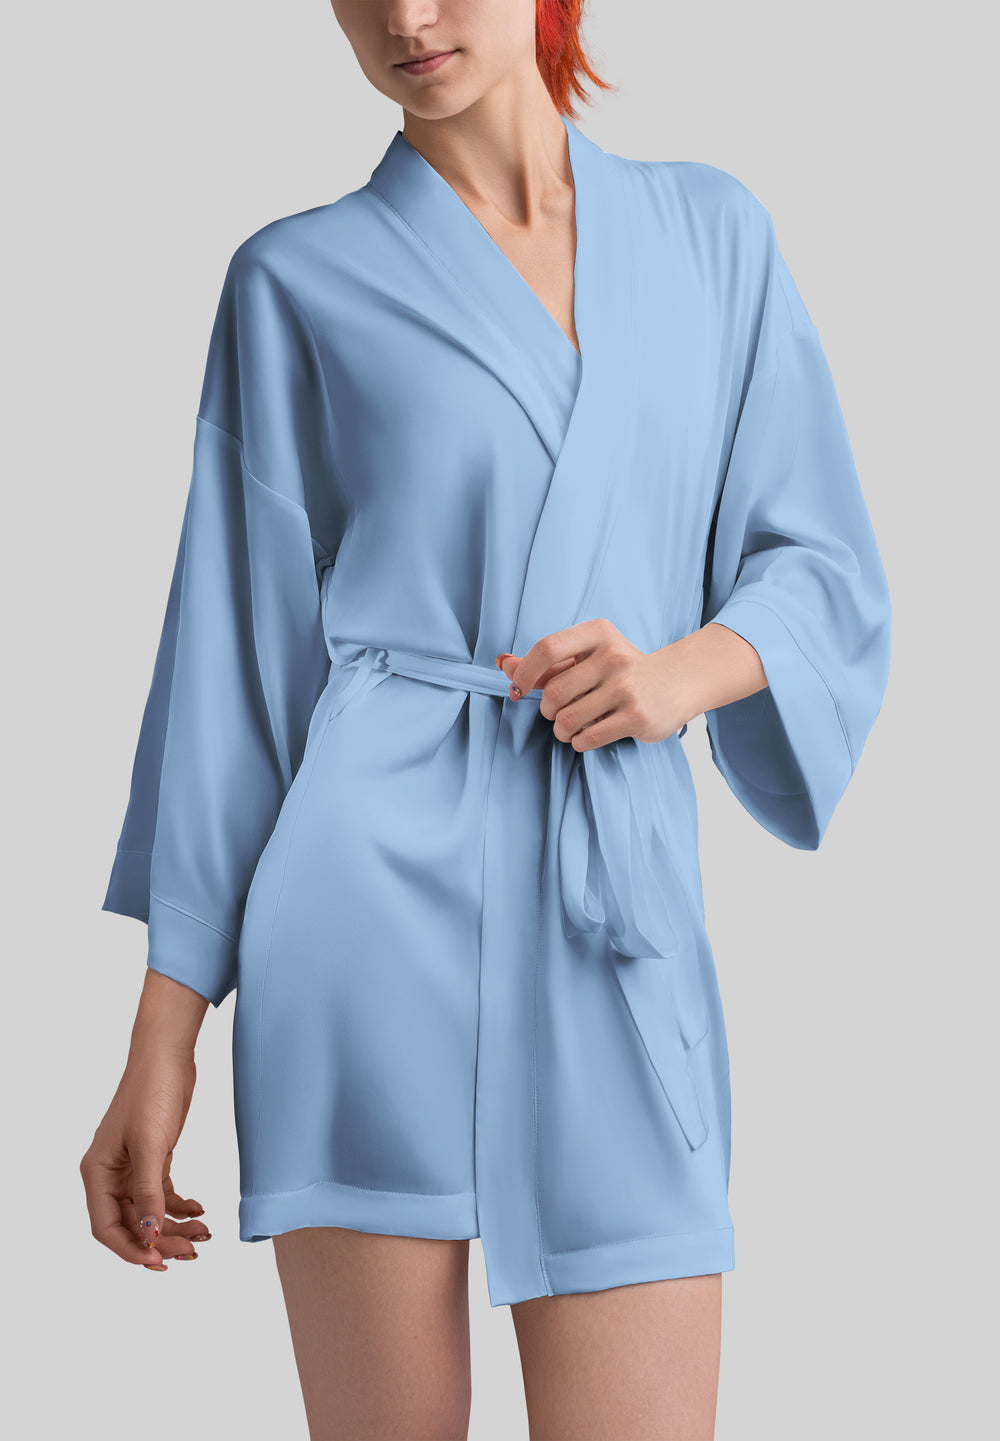 Woman wearing light blue satin robe